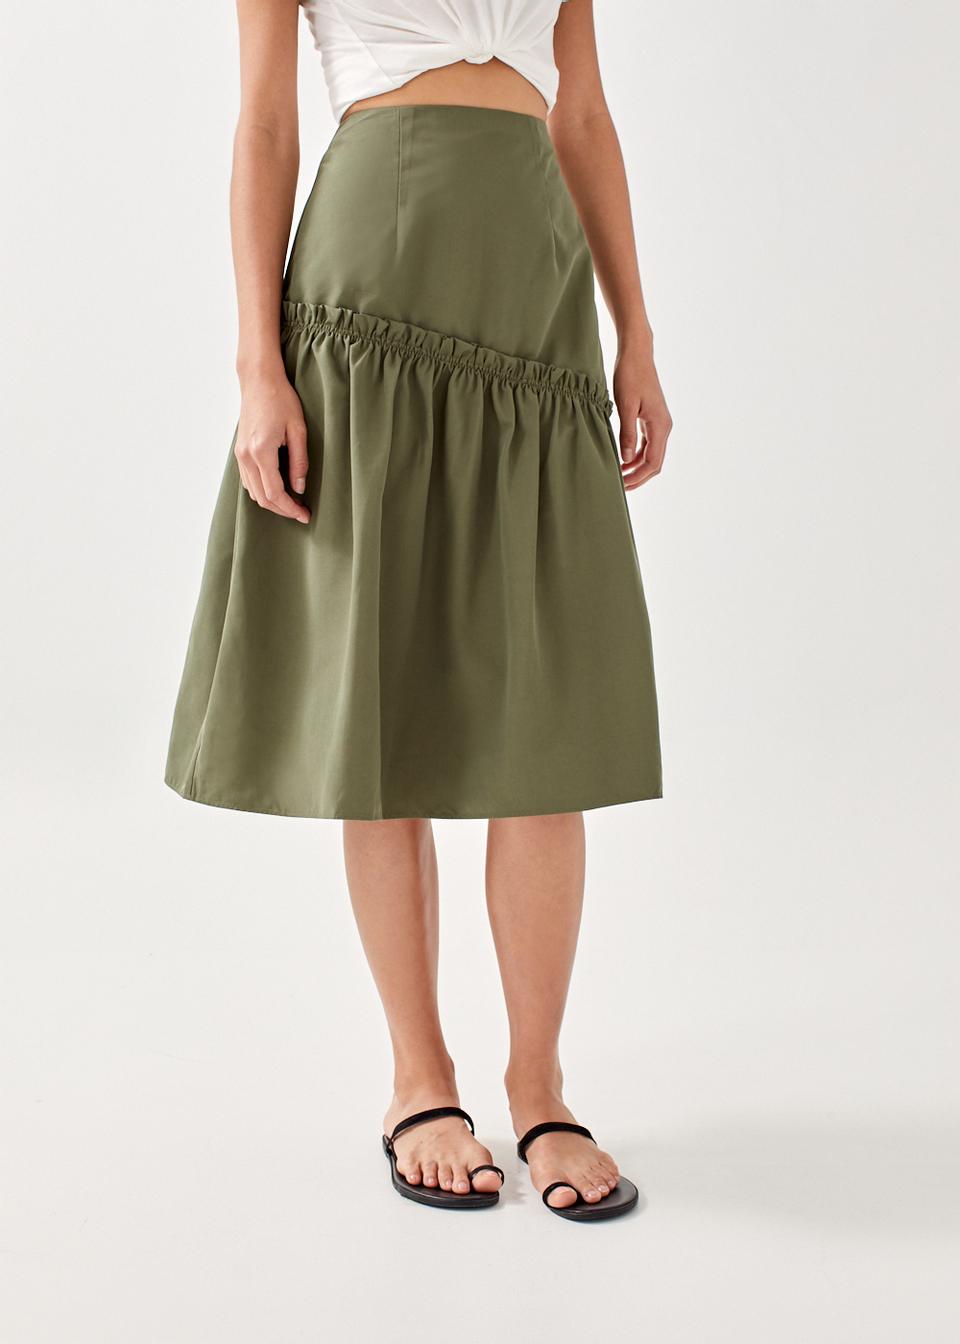 Buy Cheriea Asymmetrical Midi Skirt @ Love, Bonito | Shop Women's ...